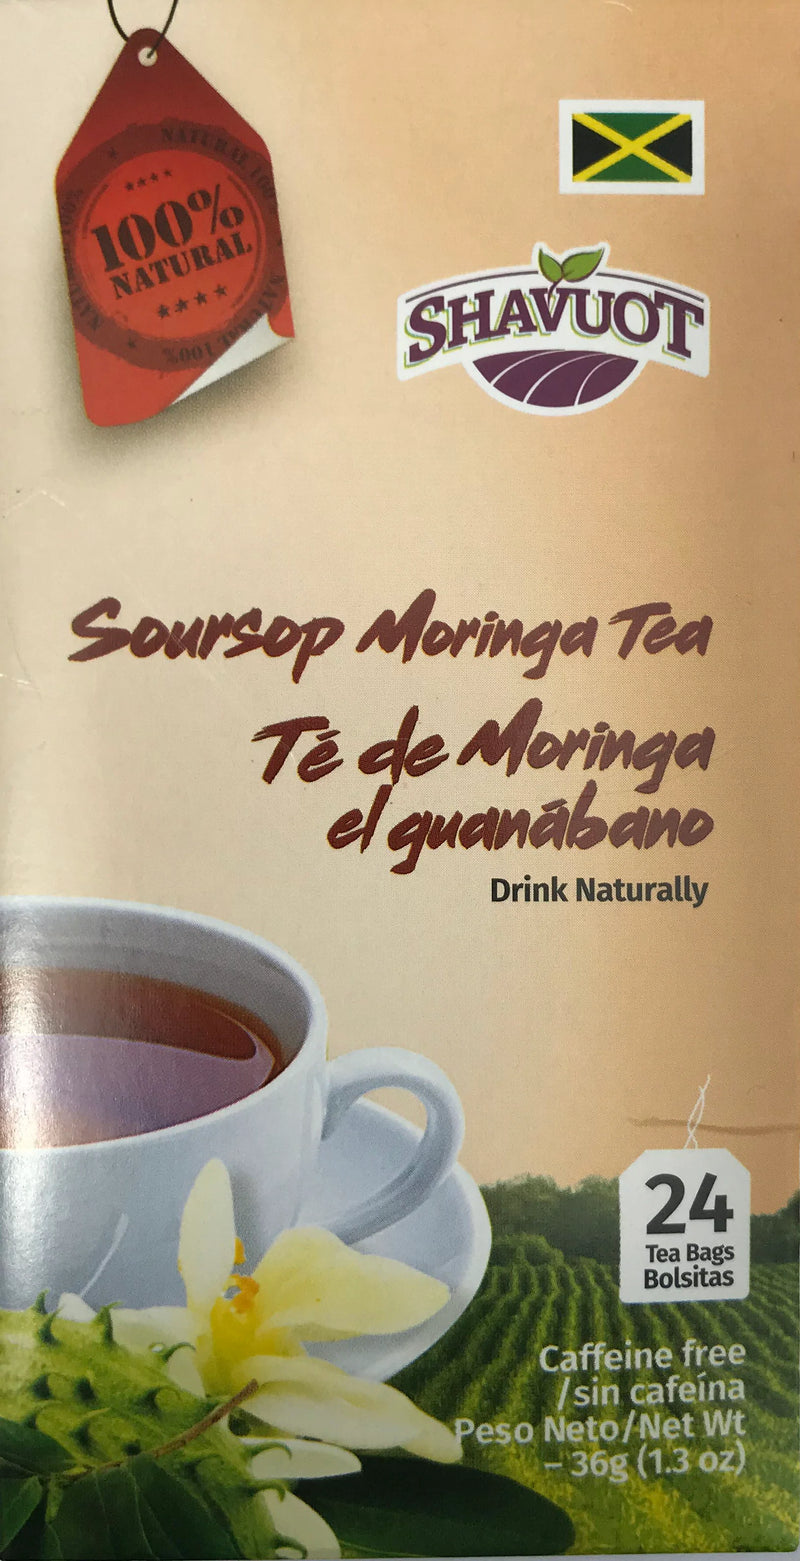 Soon Done Shavuot Moringa Tea 36g